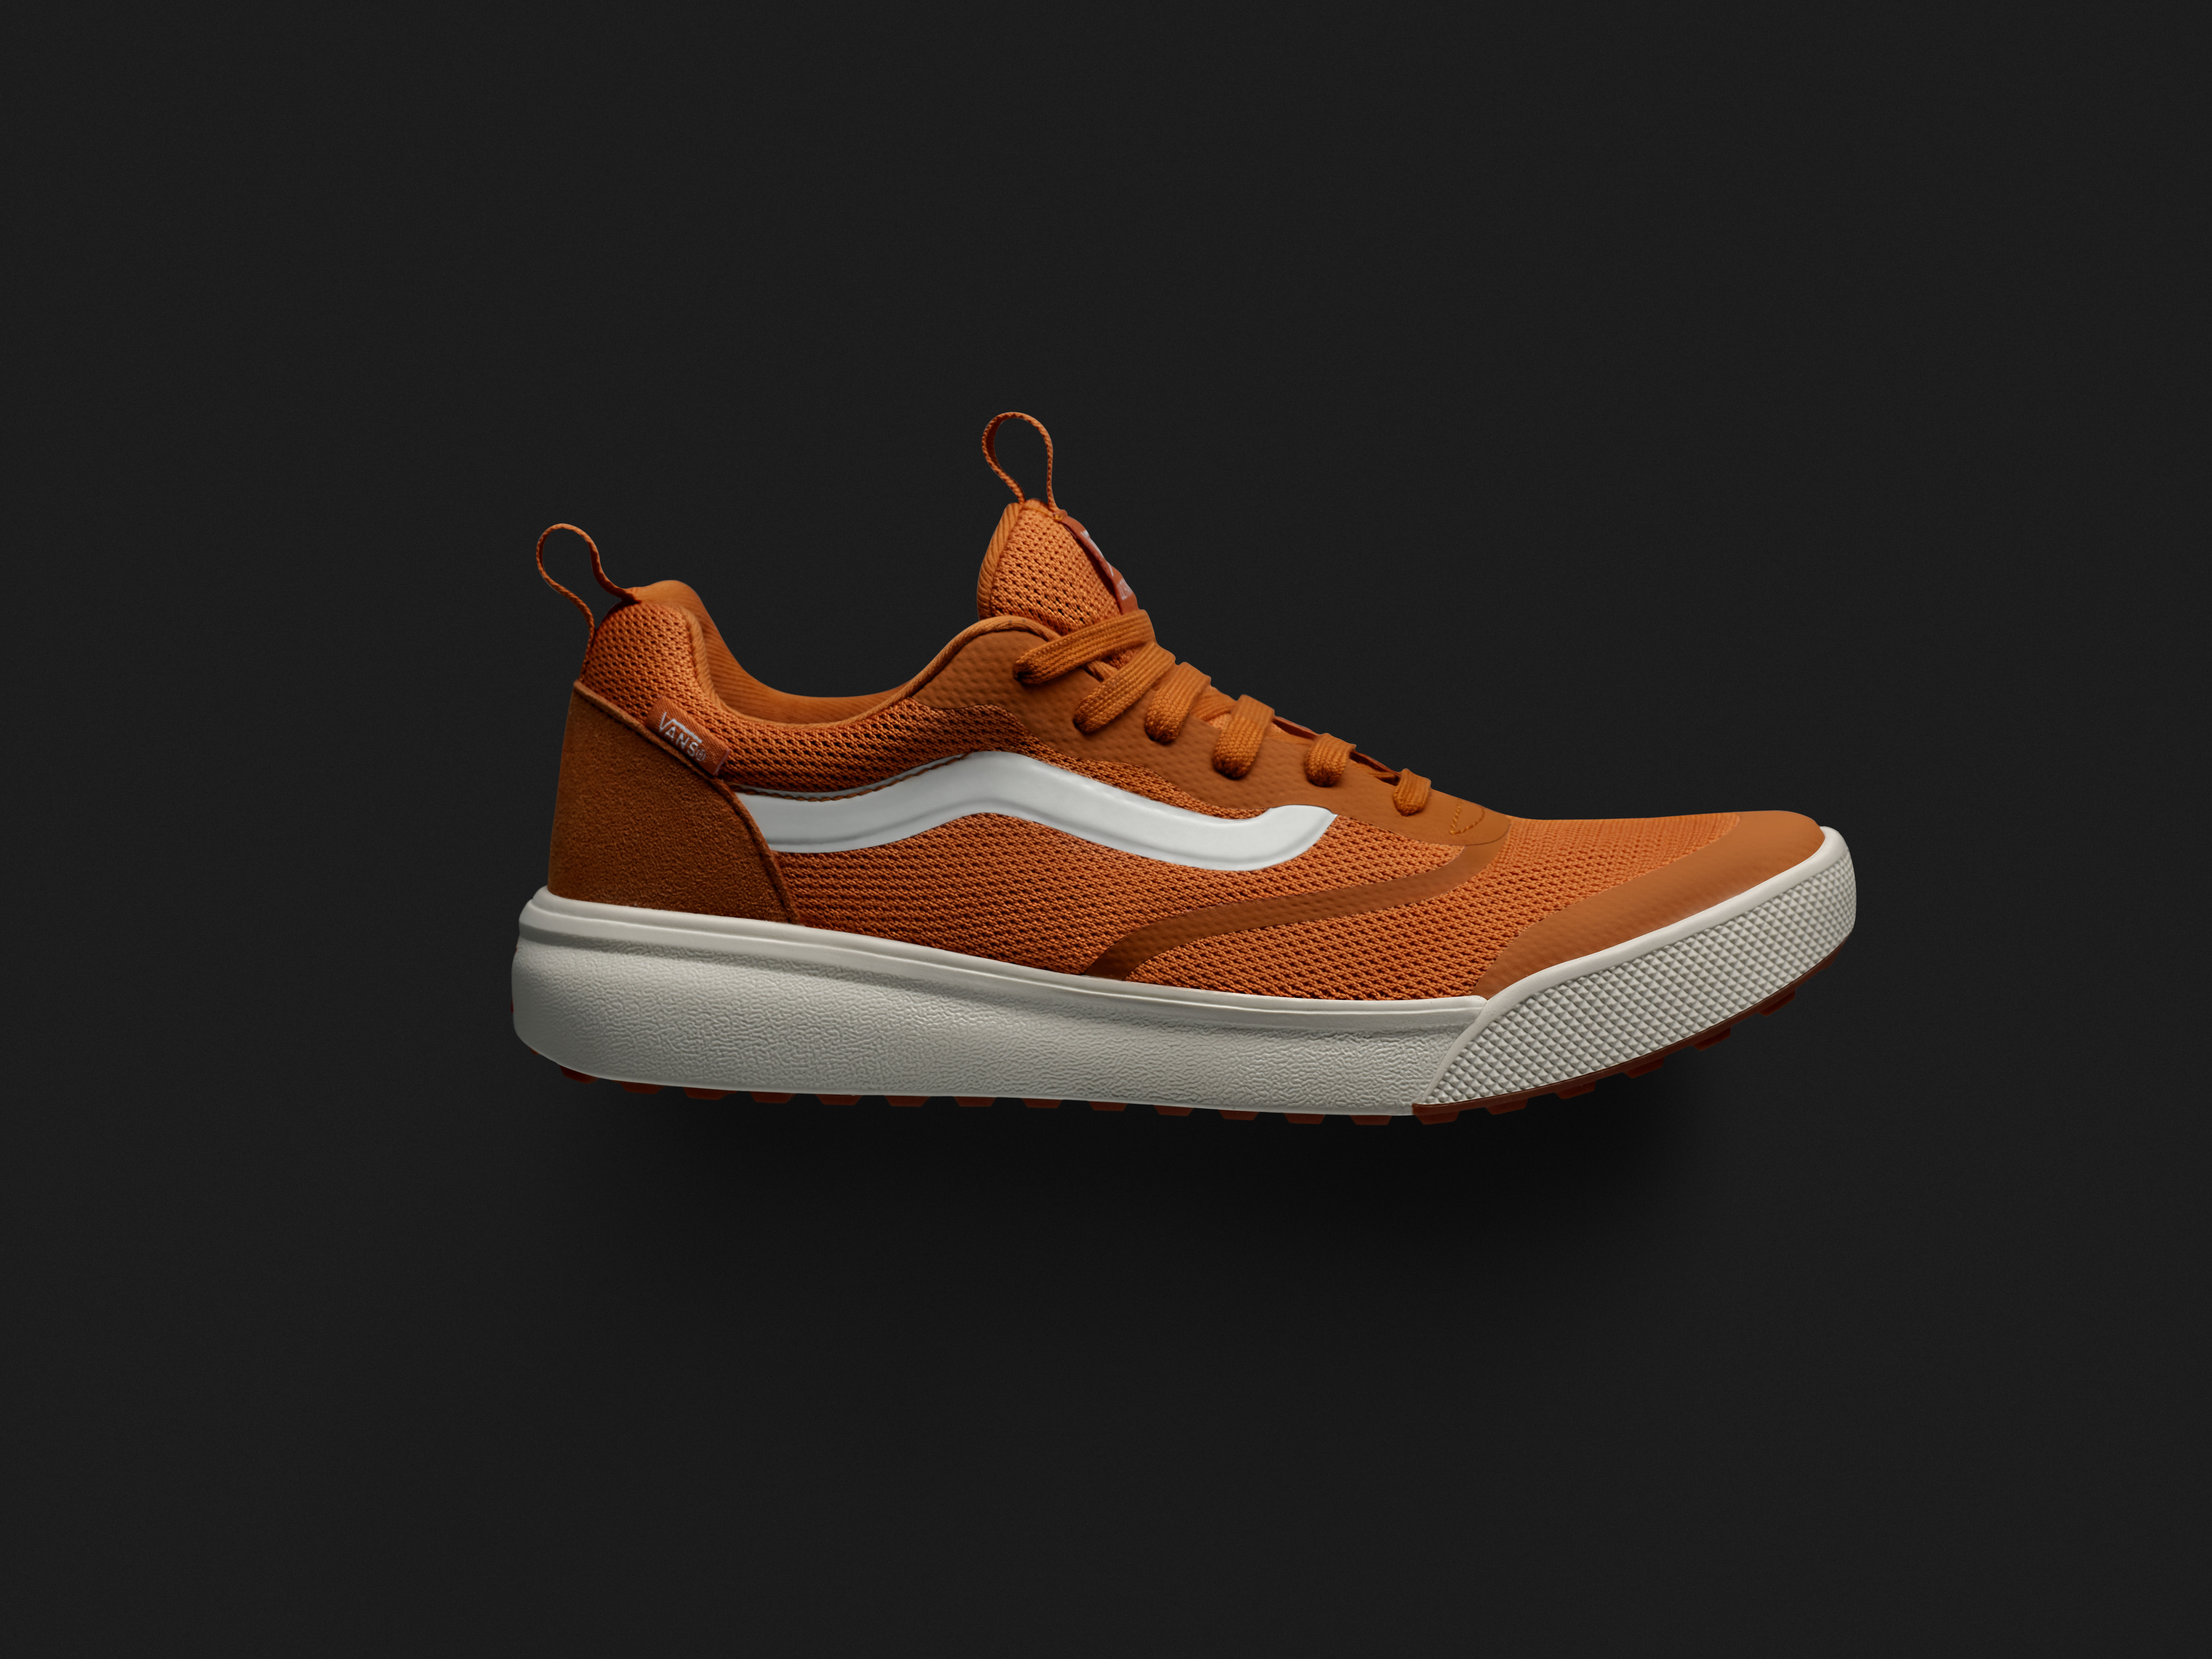 Orange Vans shoe on a grey back ground by bpdstudios 